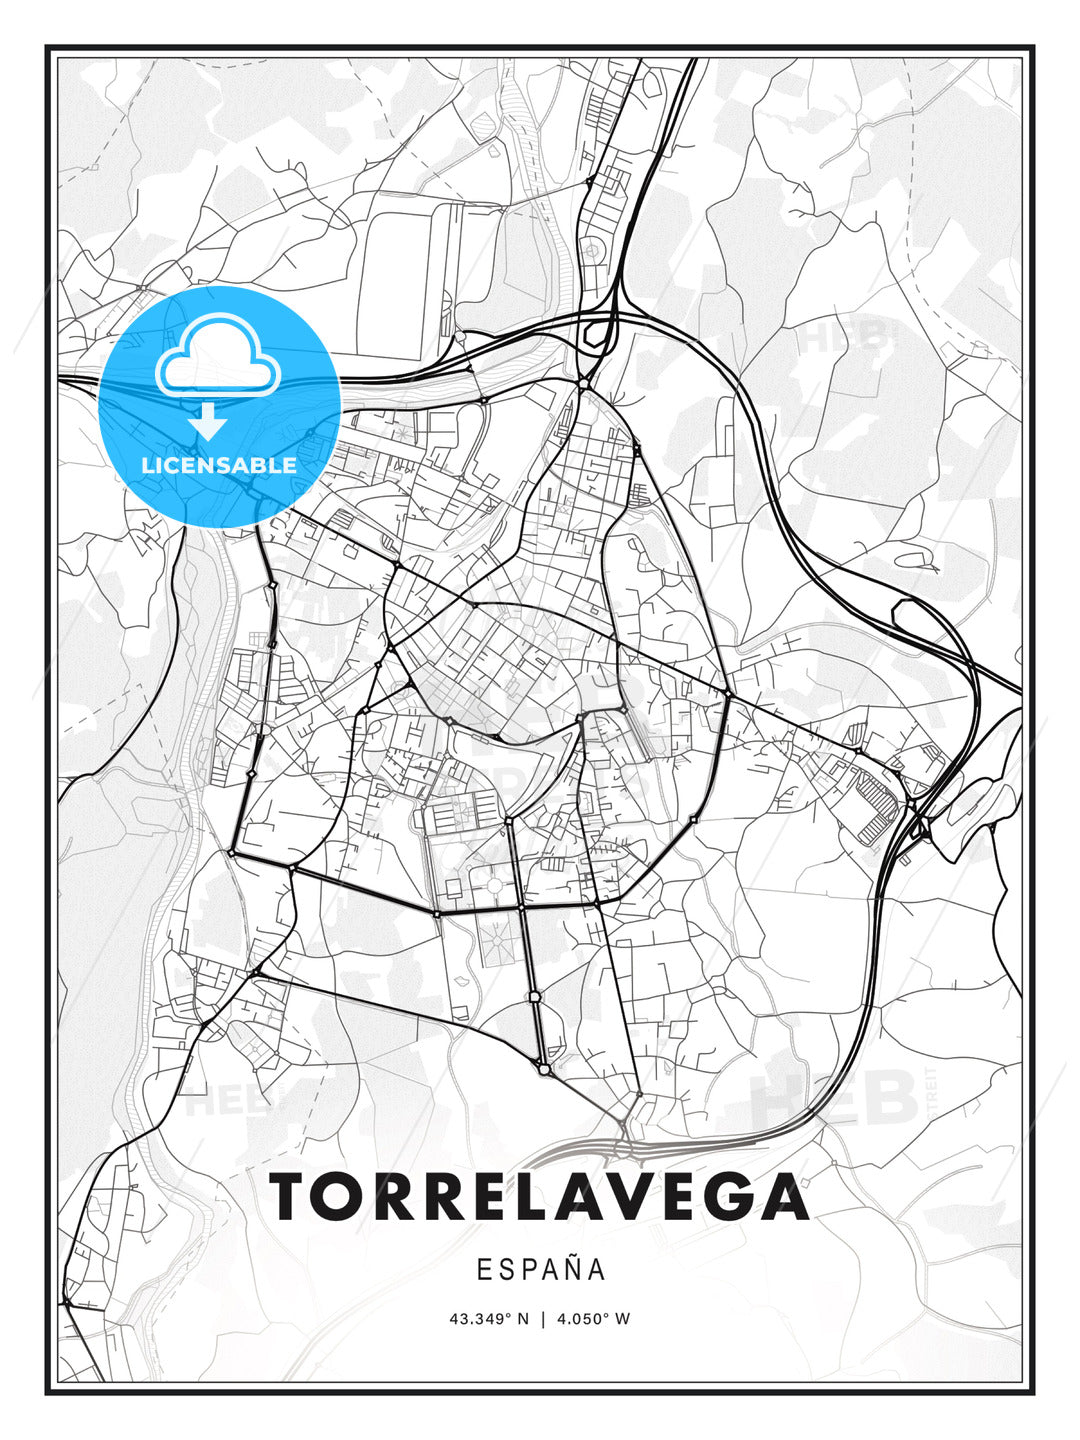 Torrelavega, Spain, Modern Print Template in Various Formats - HEBSTREITS Sketches